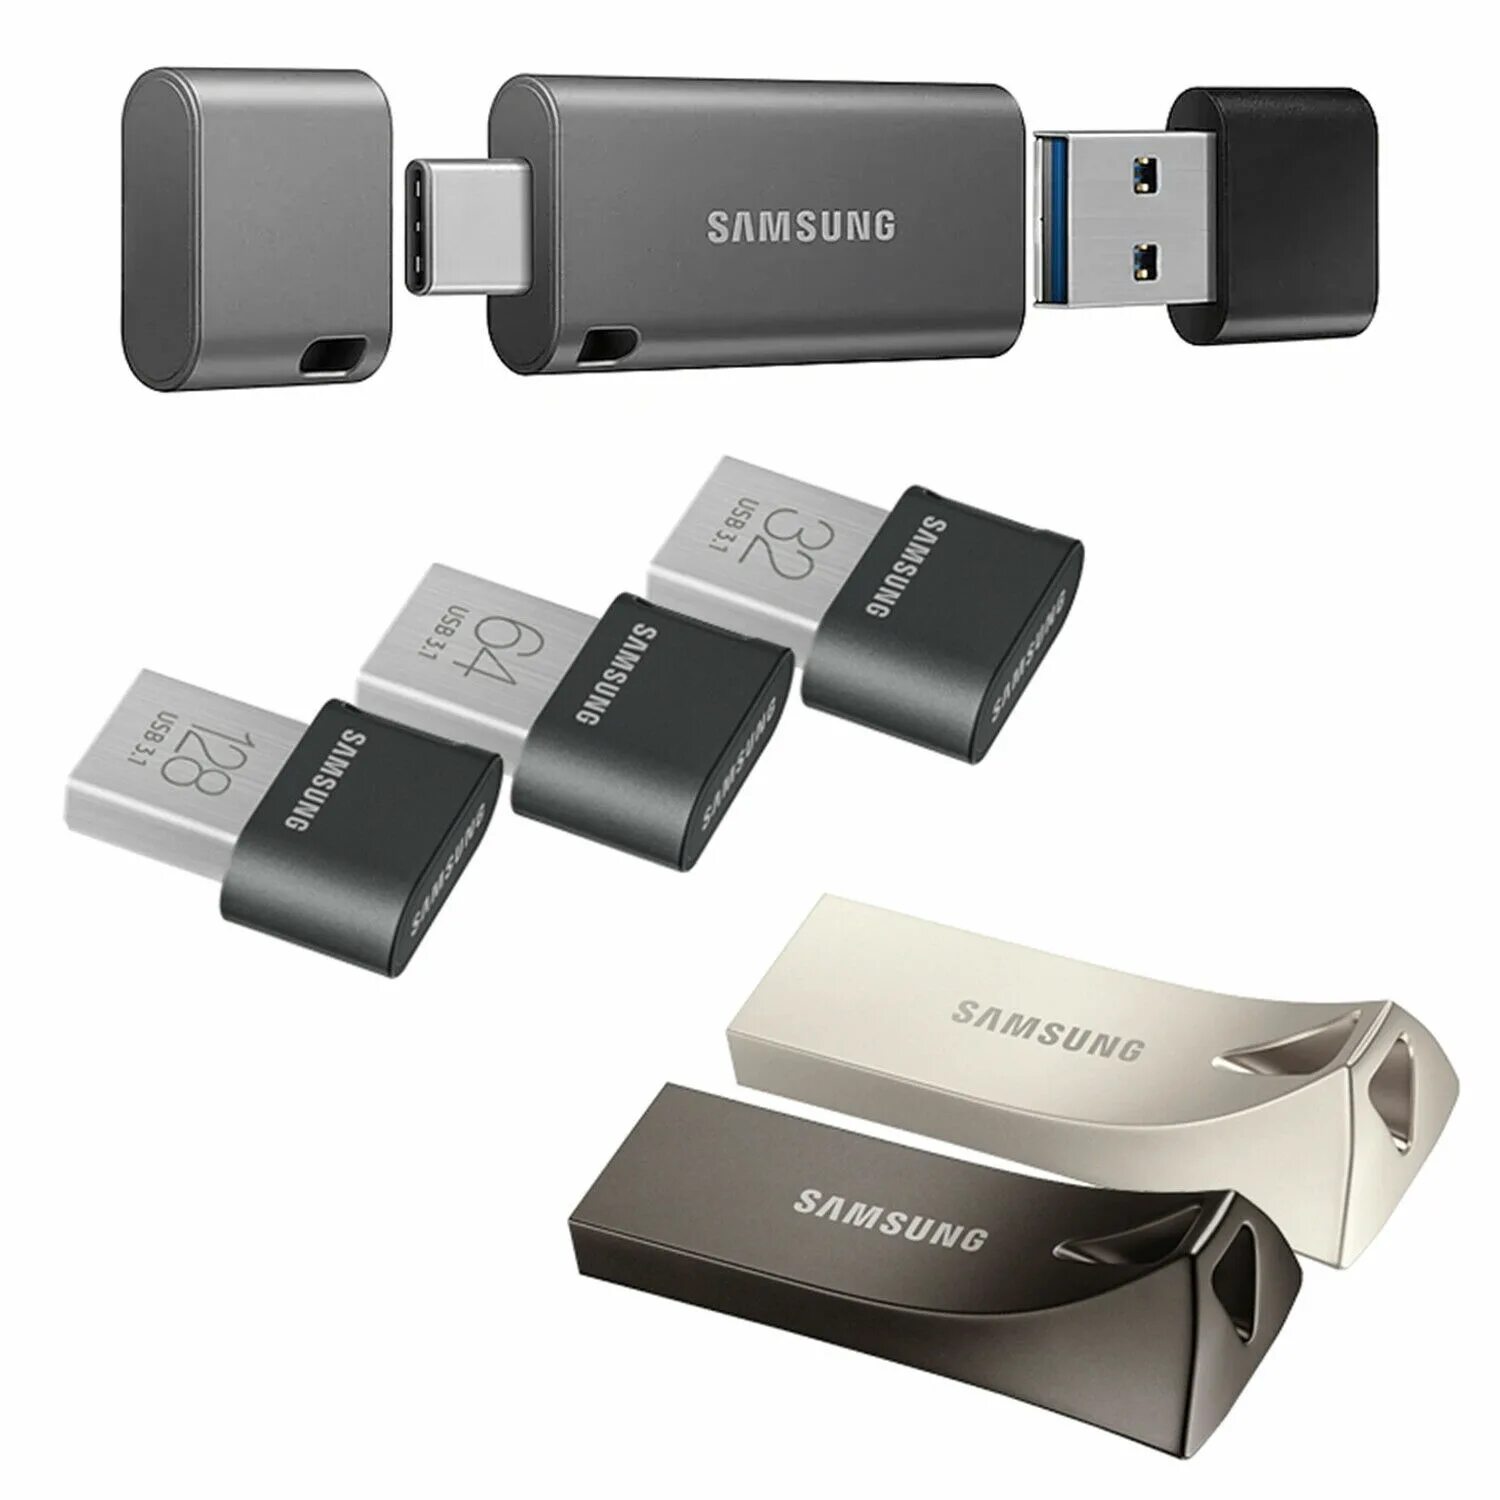 Флеша карты samsung. Samsung USB 3.1 Flash Drive Duo Plus. Samsung USB 3.1 Flash Drive Fit Plus. Флешка Samsung USB 3.1 Flash Drive Fit Plus 128gb. Samsung Duo Plus USB 3.1 64gb.